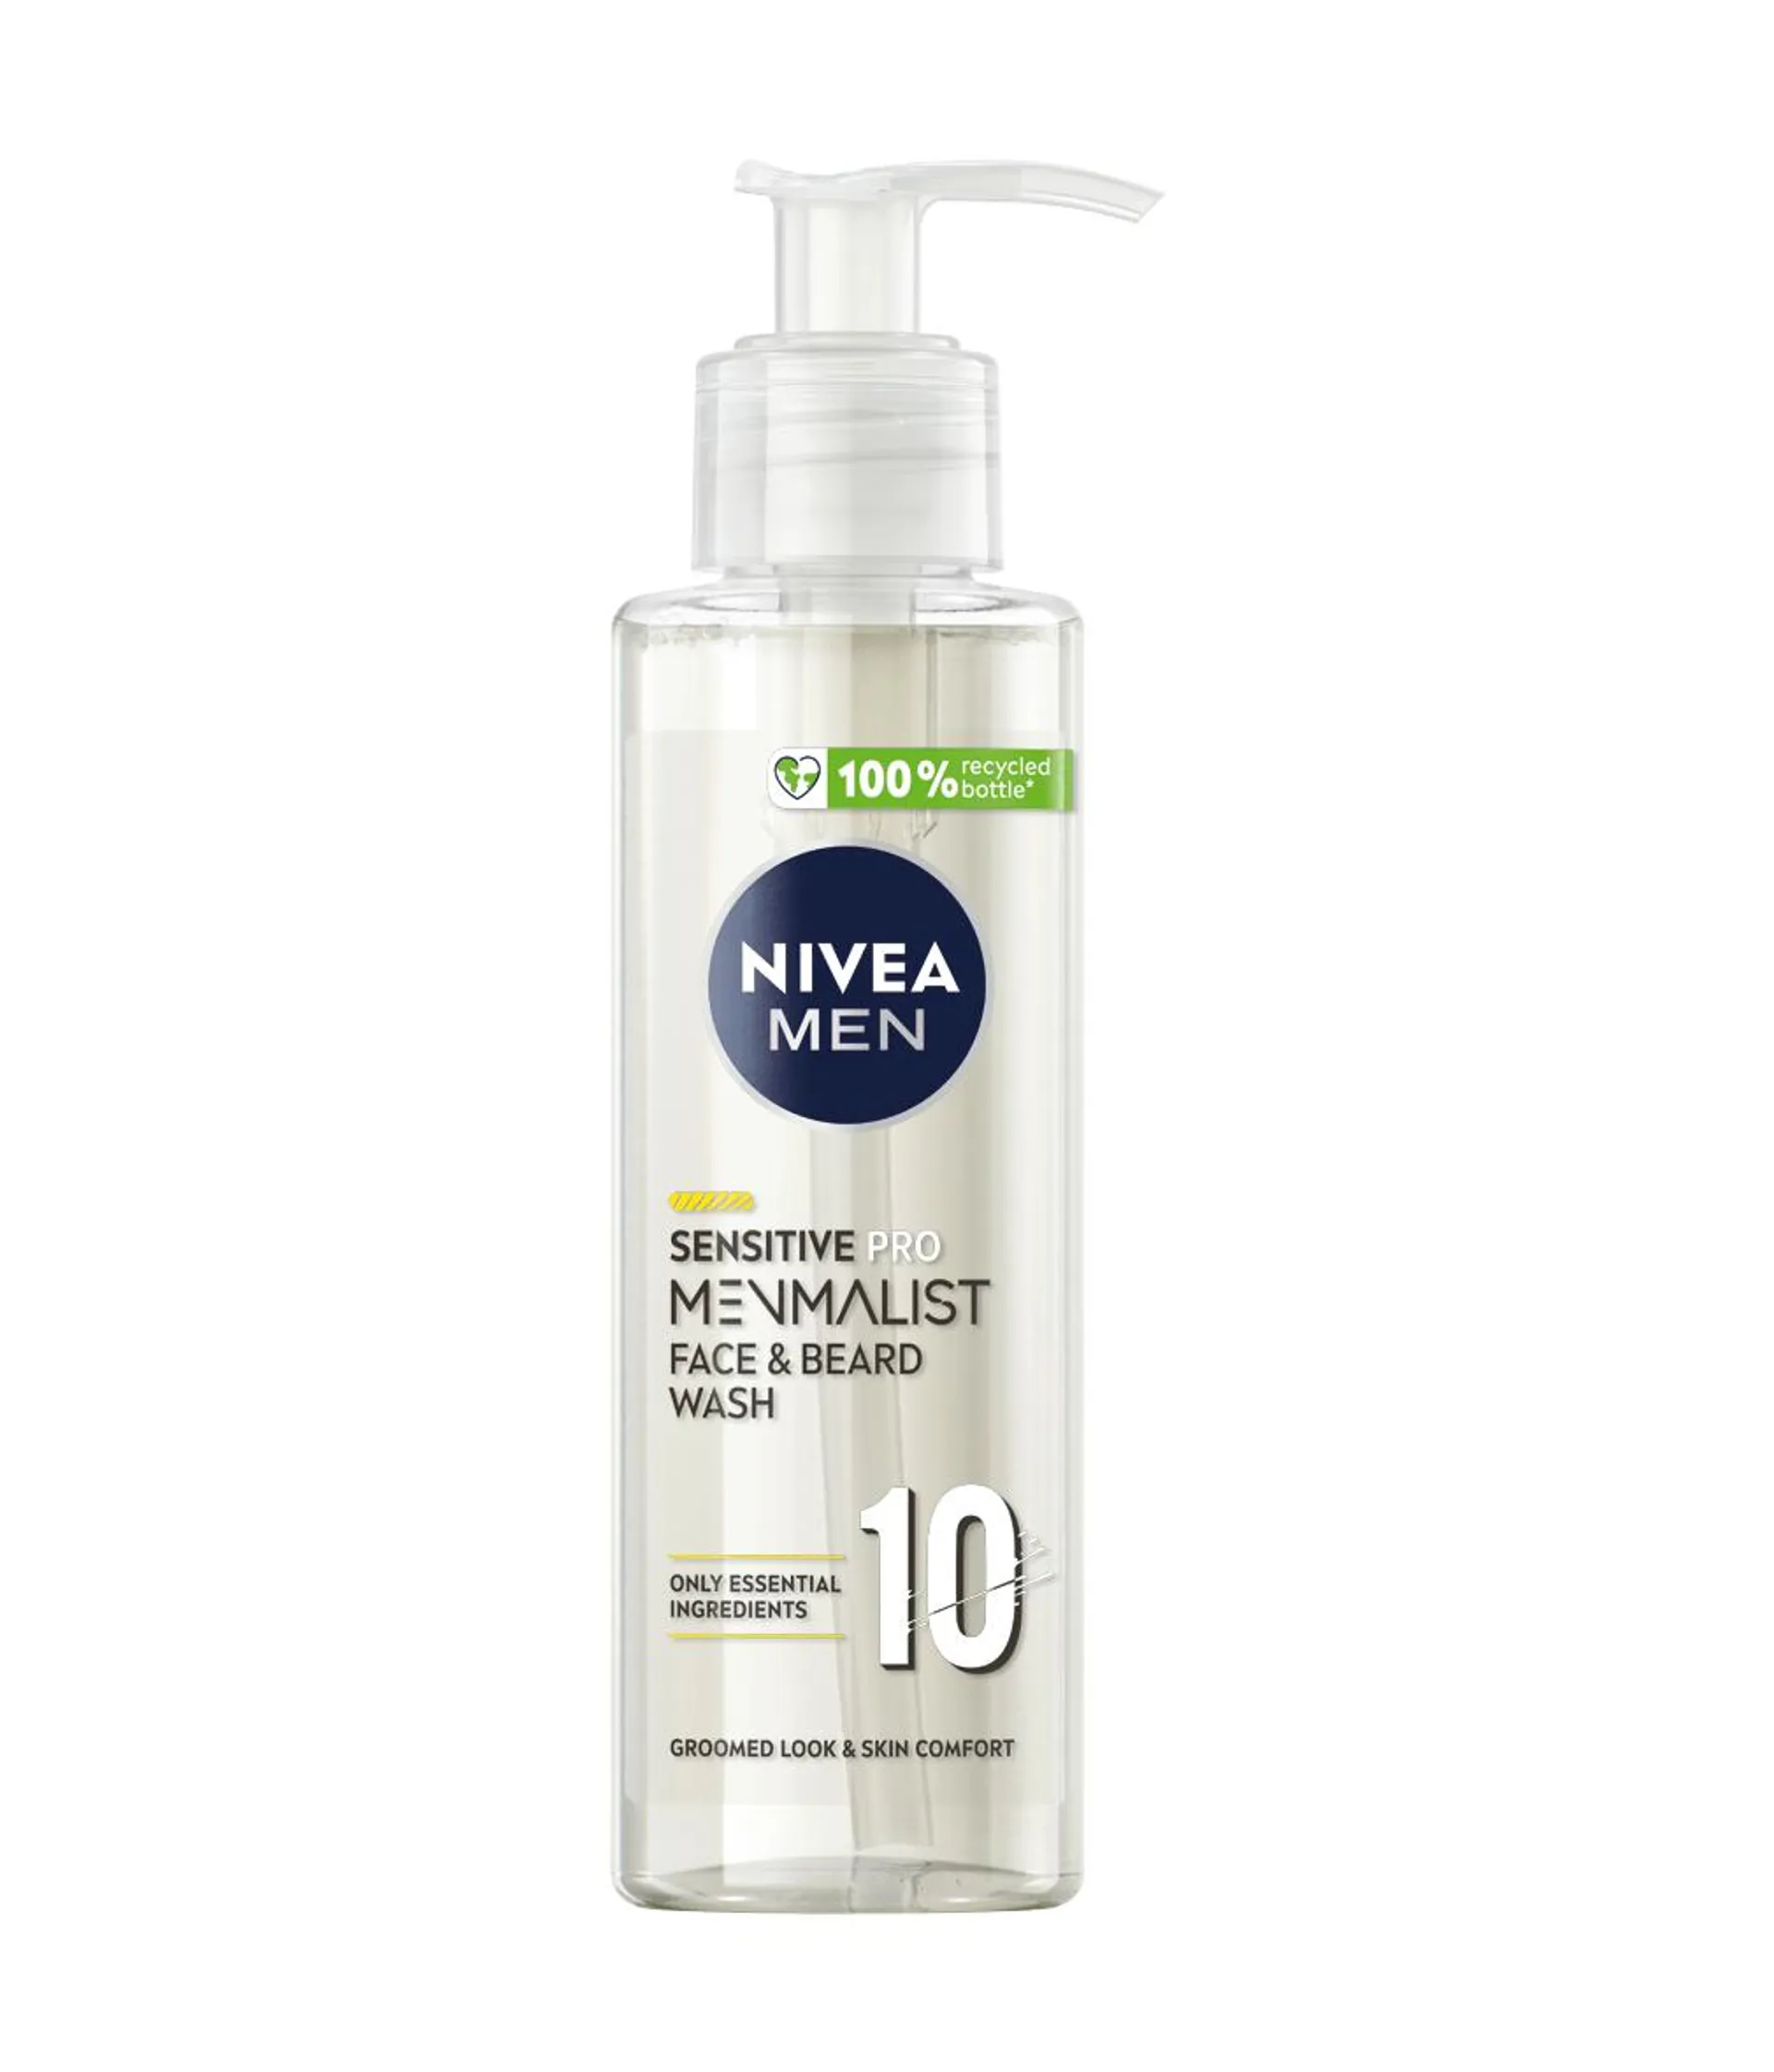 NIVEA MEN Sensitive Pro Menmalist Face & Beard Wash